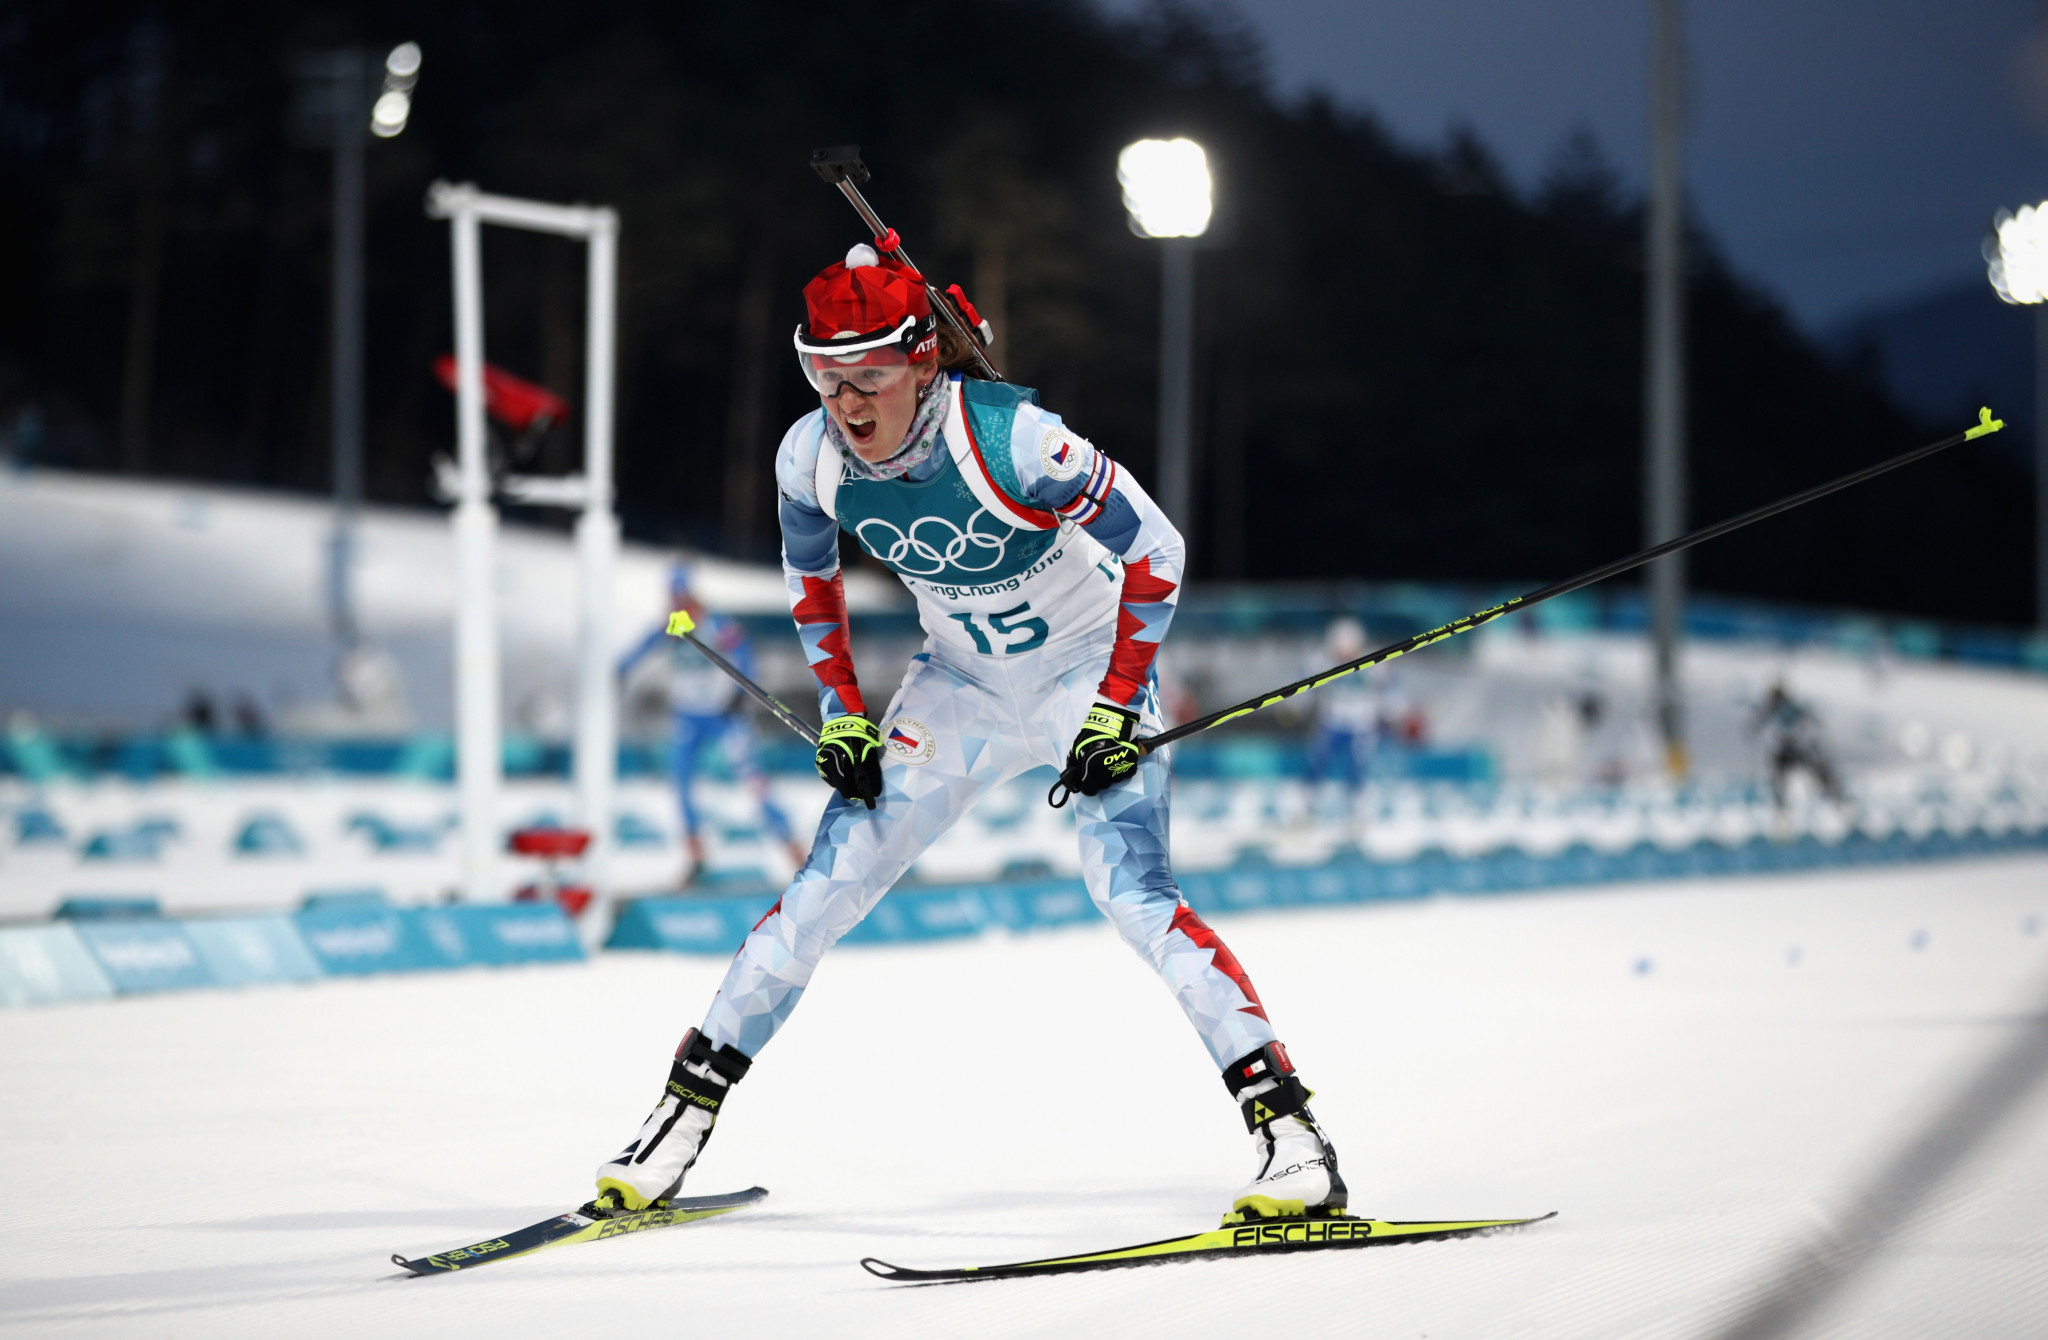 Two-time Olympic medallist Vítková announces retirement from biathlon